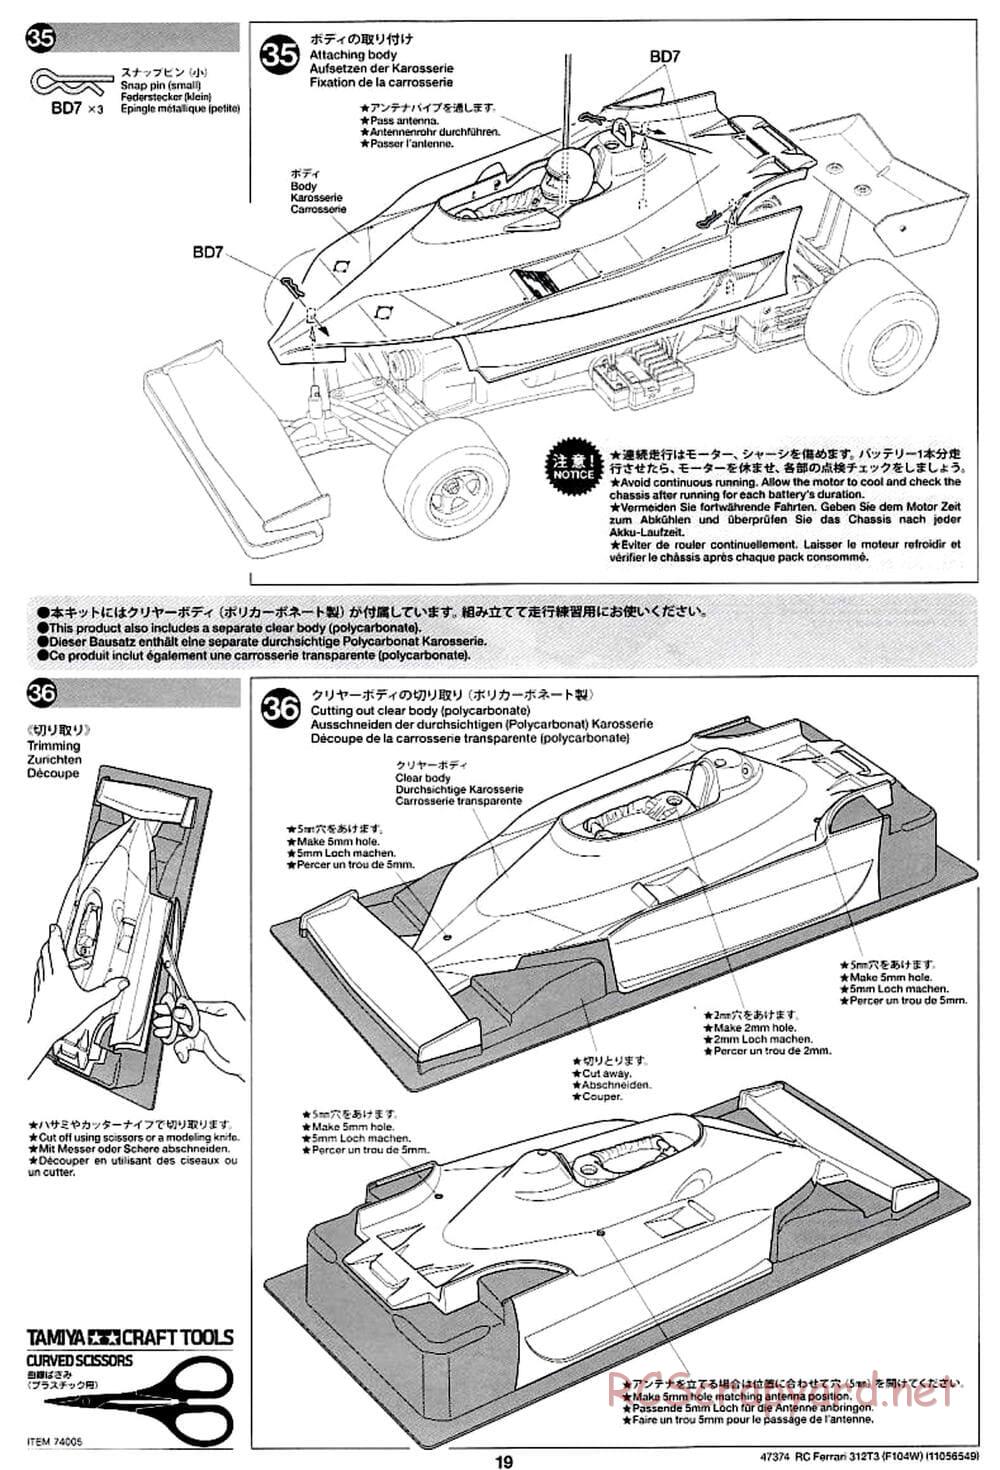 Tamiya - Ferrari 312T3 - F104W Chassis - Manual - Page 19